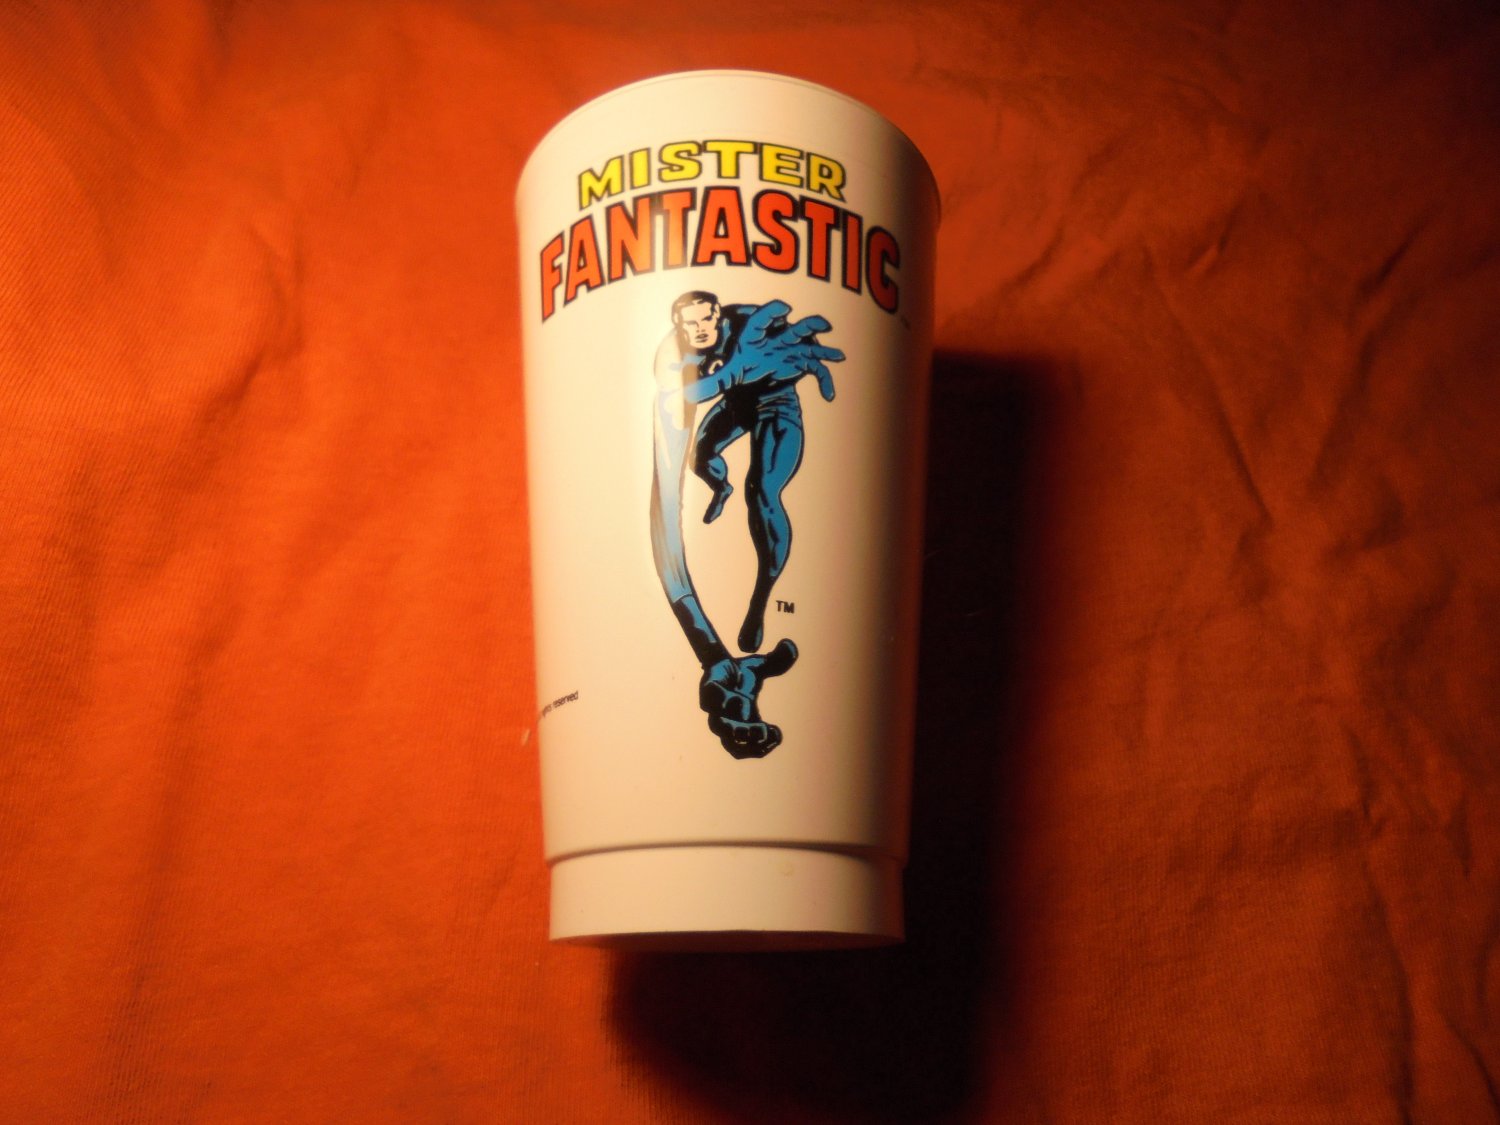 1975 Marvel Comics MR. FANTASTIC  7-11 COLLECTIBLE CUP!!  $17.00 obo!